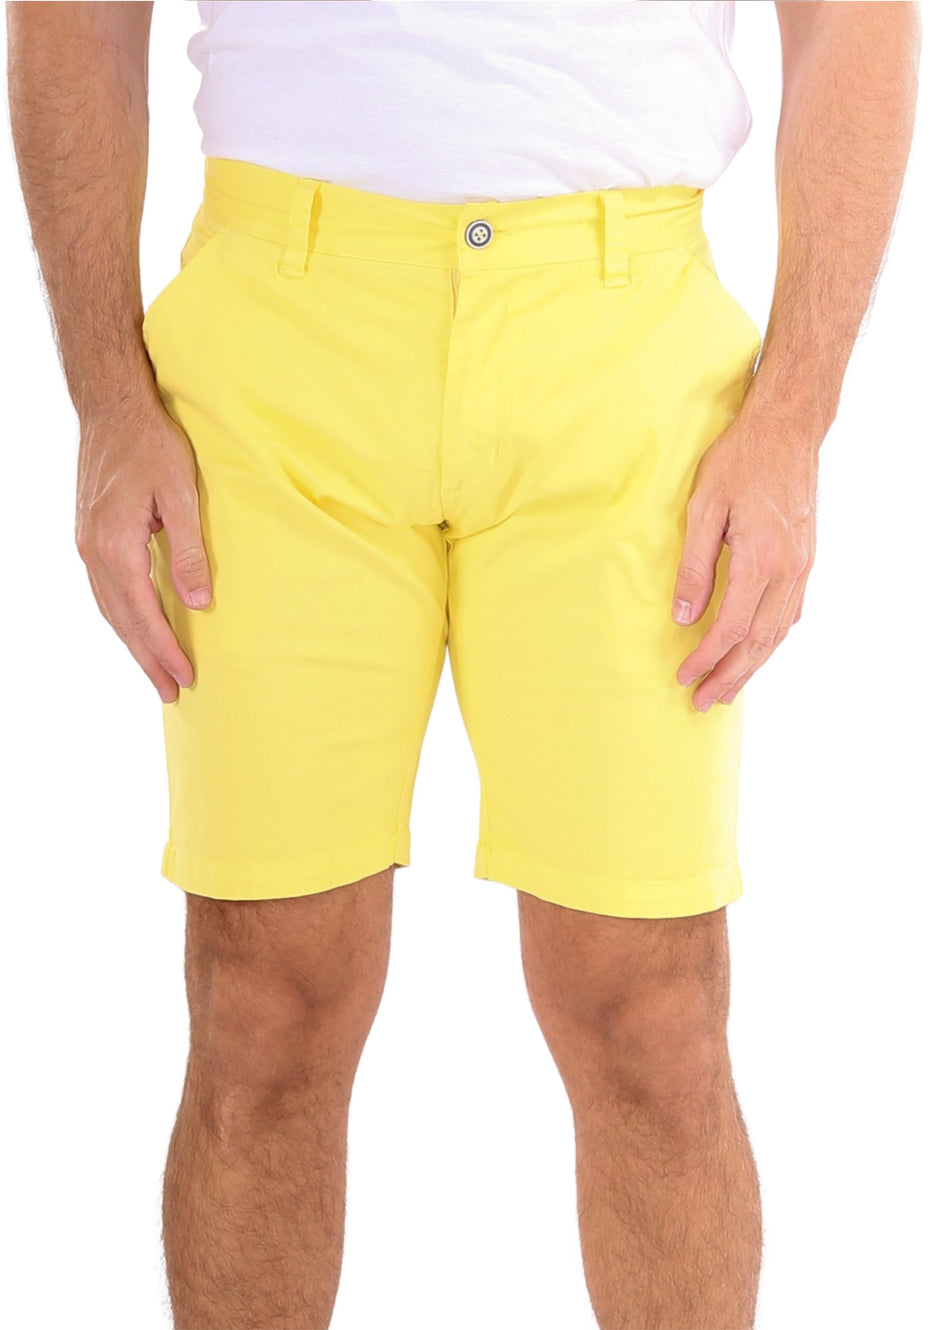 183110 - Yellow Fashion Shorts